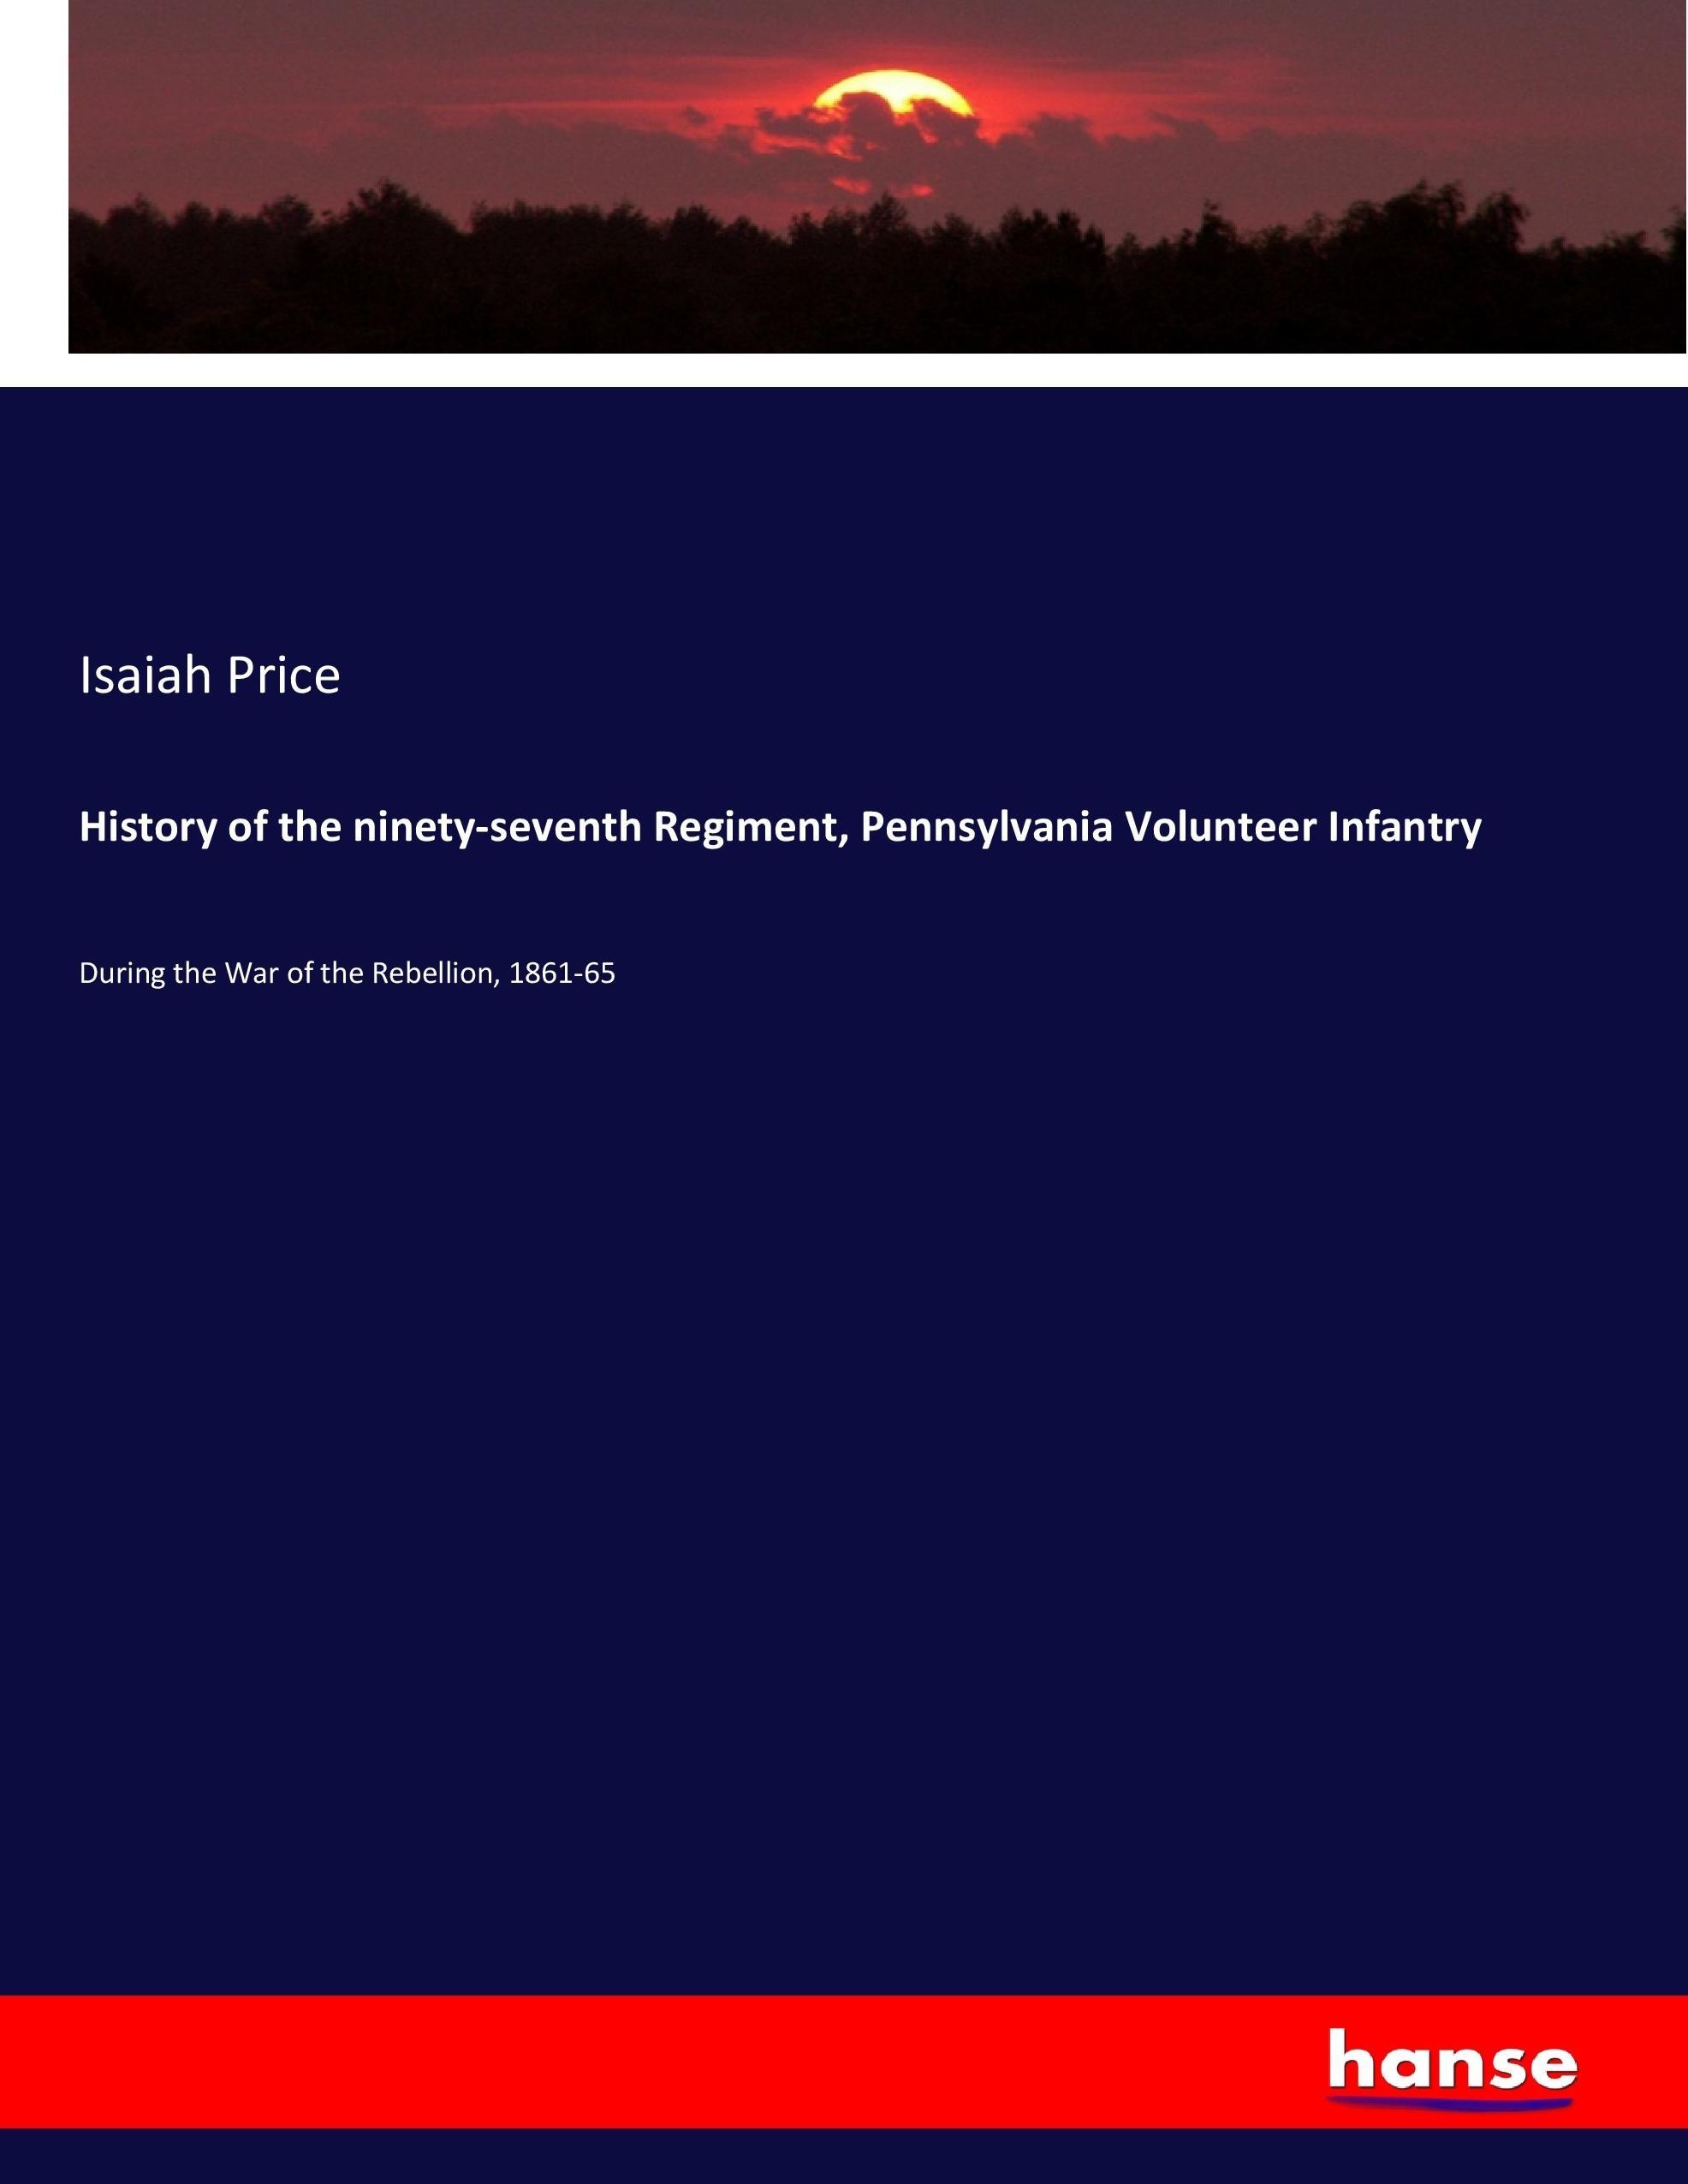 History of the ninety-seventh Regiment, Pennsylvania Volunteer Infantry - Price, Isaiah